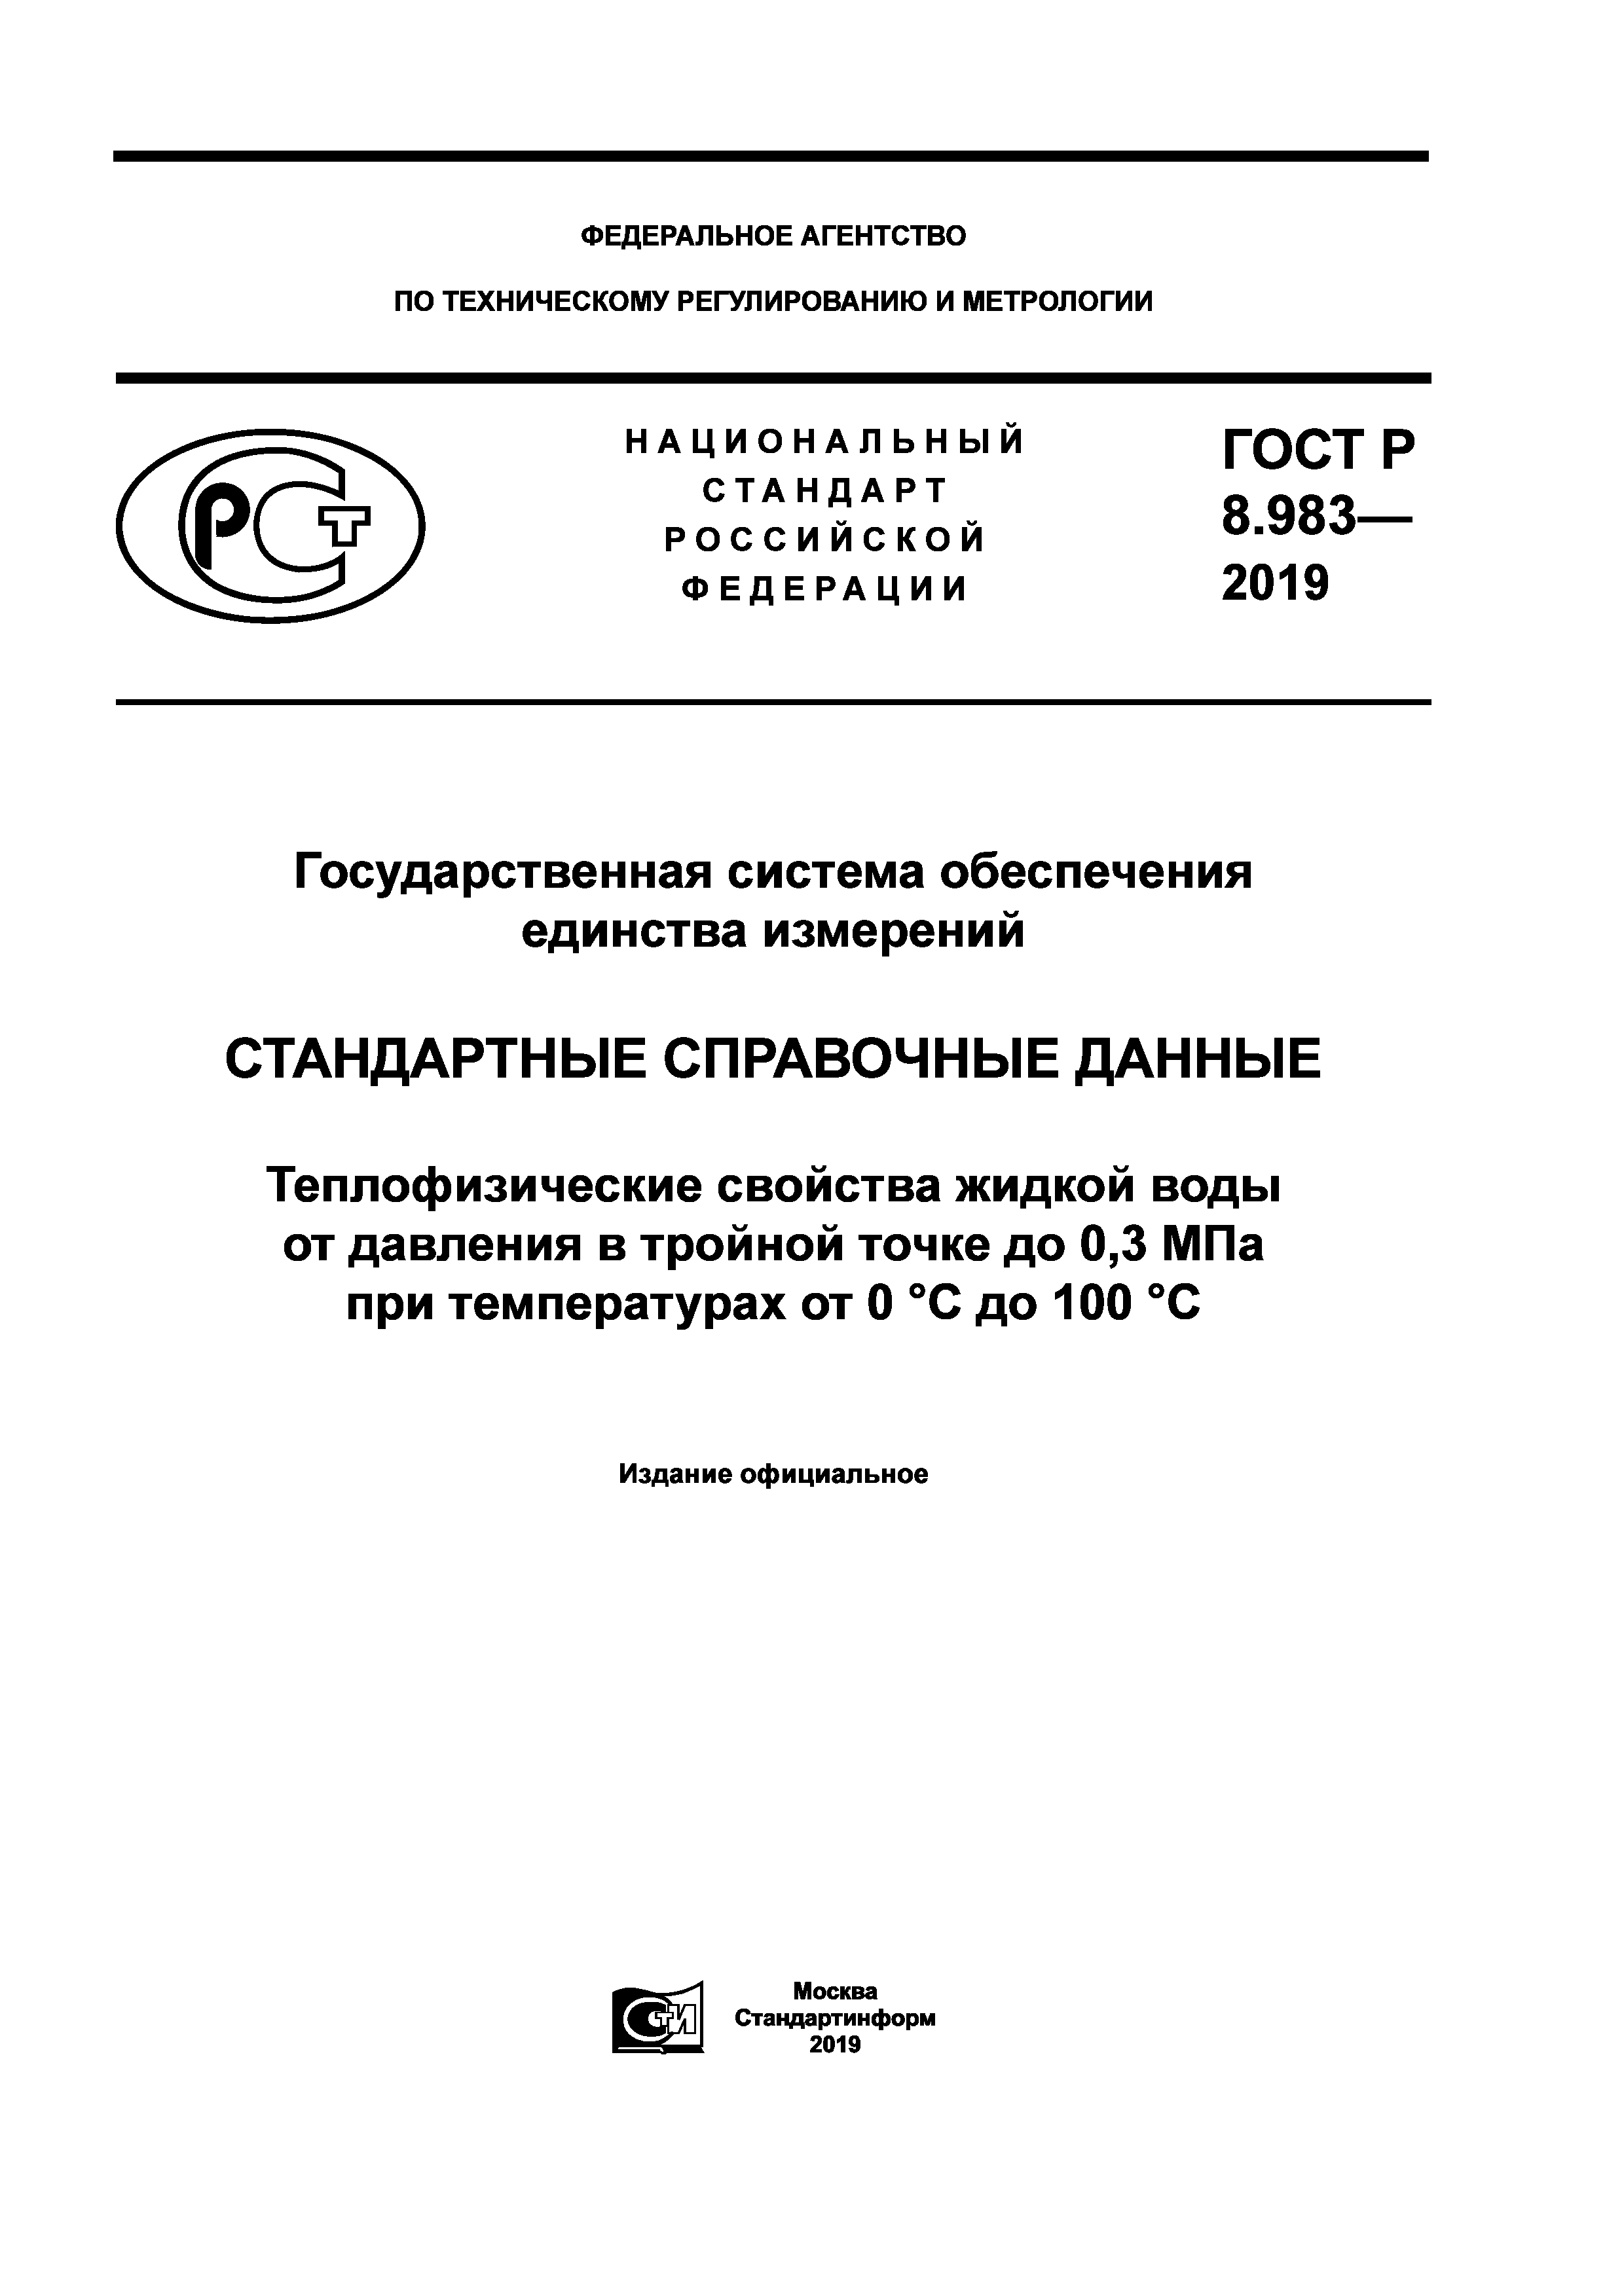 ГОСТ Р 8.983-2019